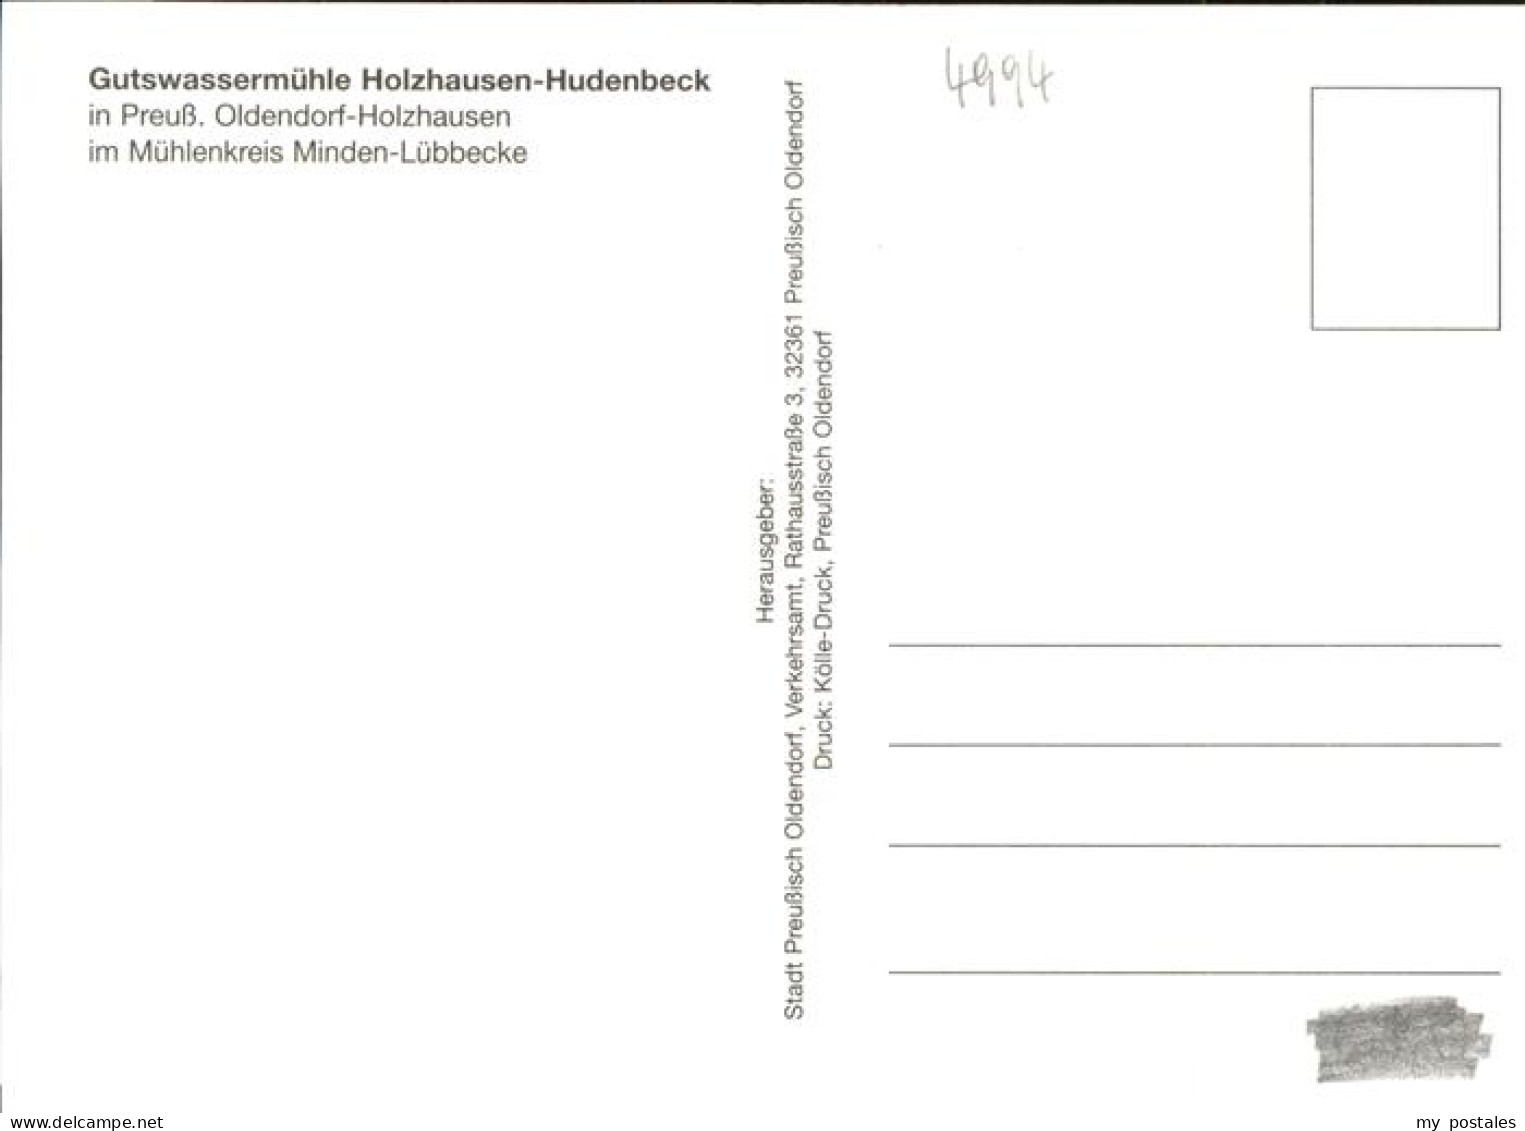 41277000 Preussisch Oldendorf Gutswassermuehle Holzhausen Hudenbeck Preussisch O - Getmold